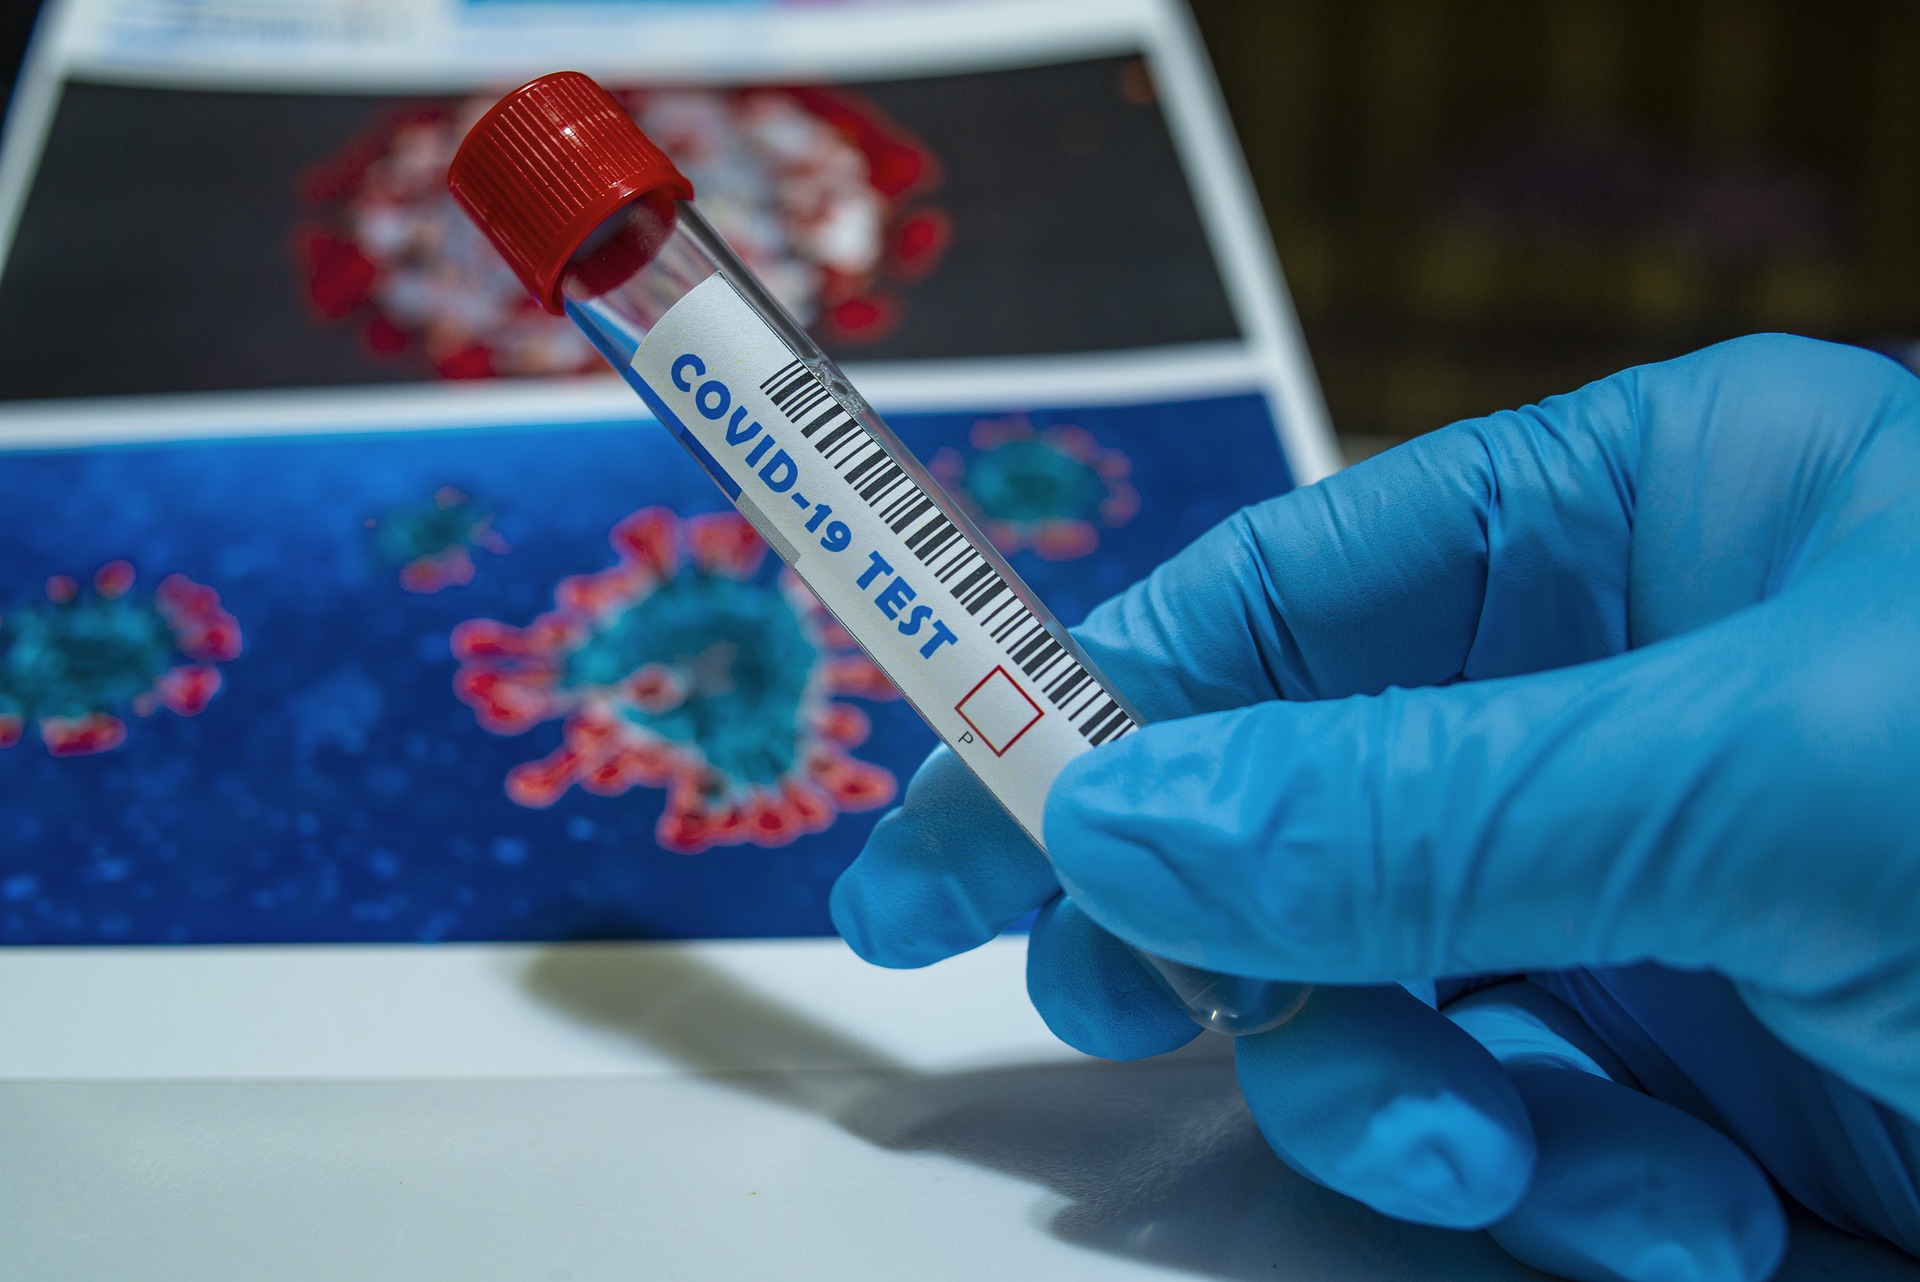 Coronavirus in Toscana: 110 nuovi casi, 1 decesso, 43 guarigioni